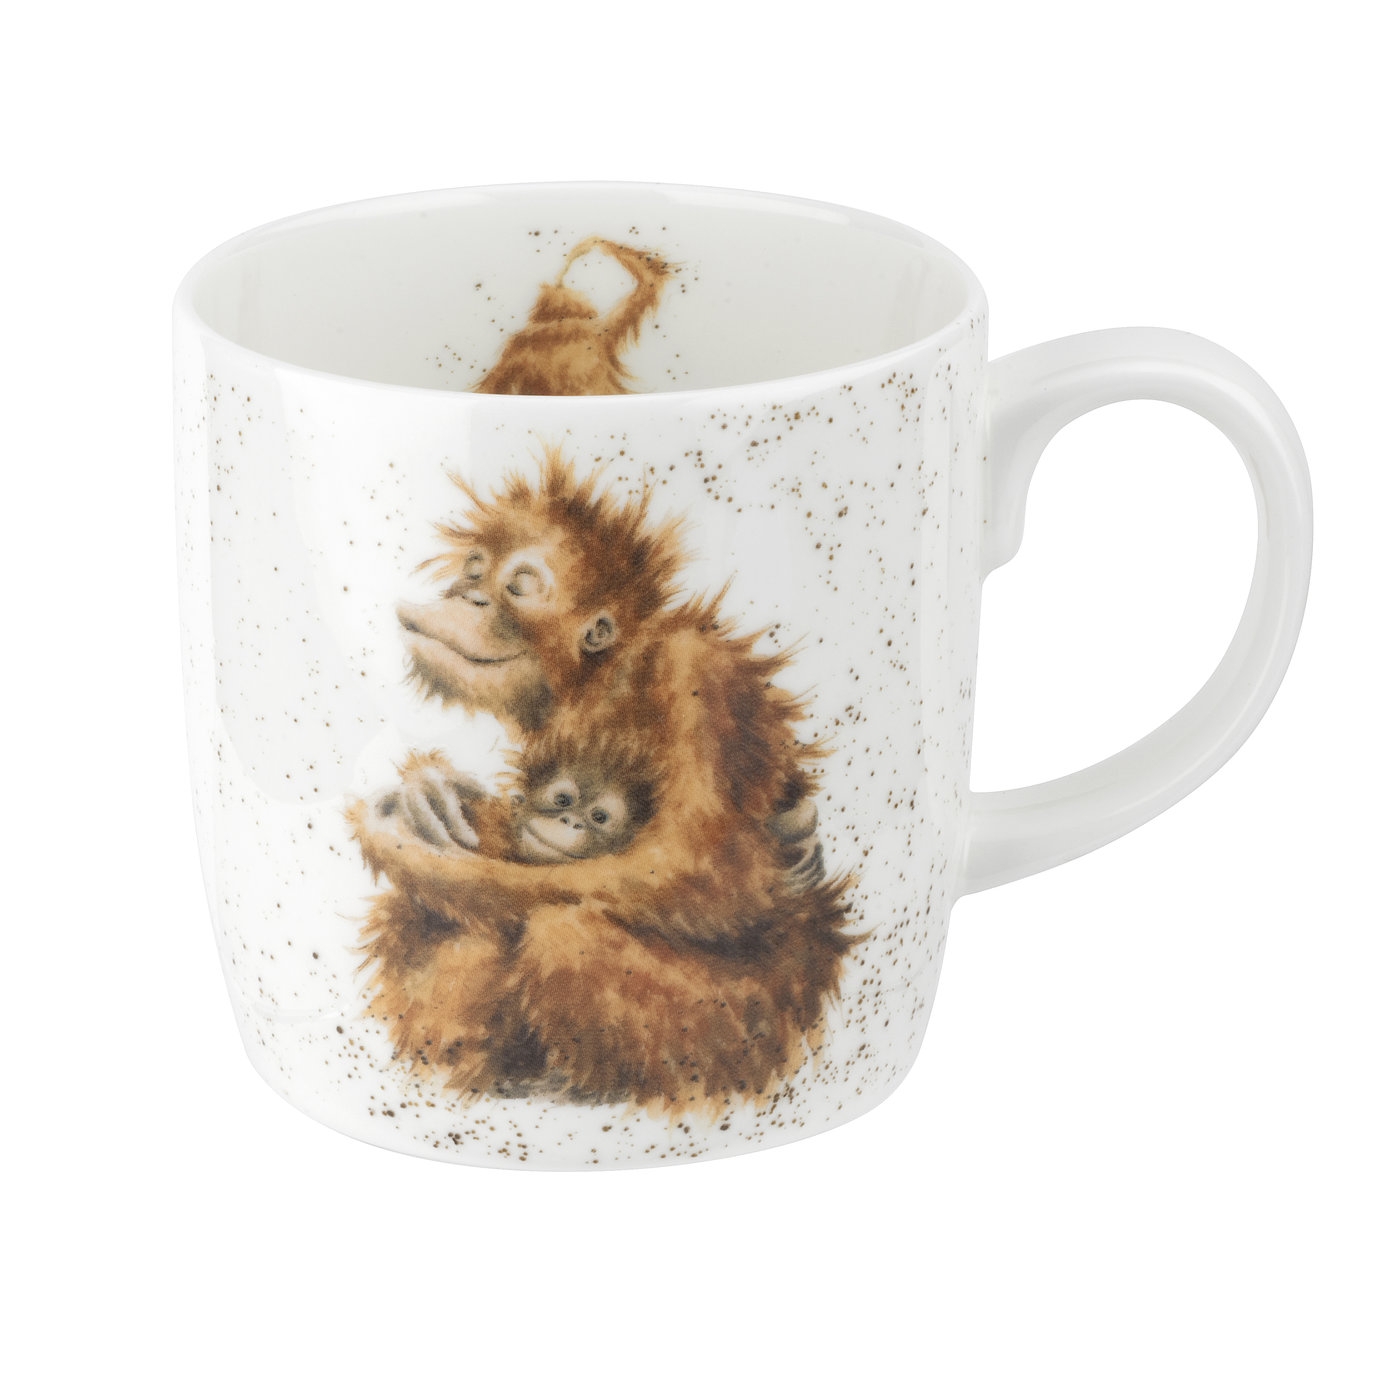 Wrendale Designs Orangutangle 14 fl.oz. Mug, Orangutan image number null